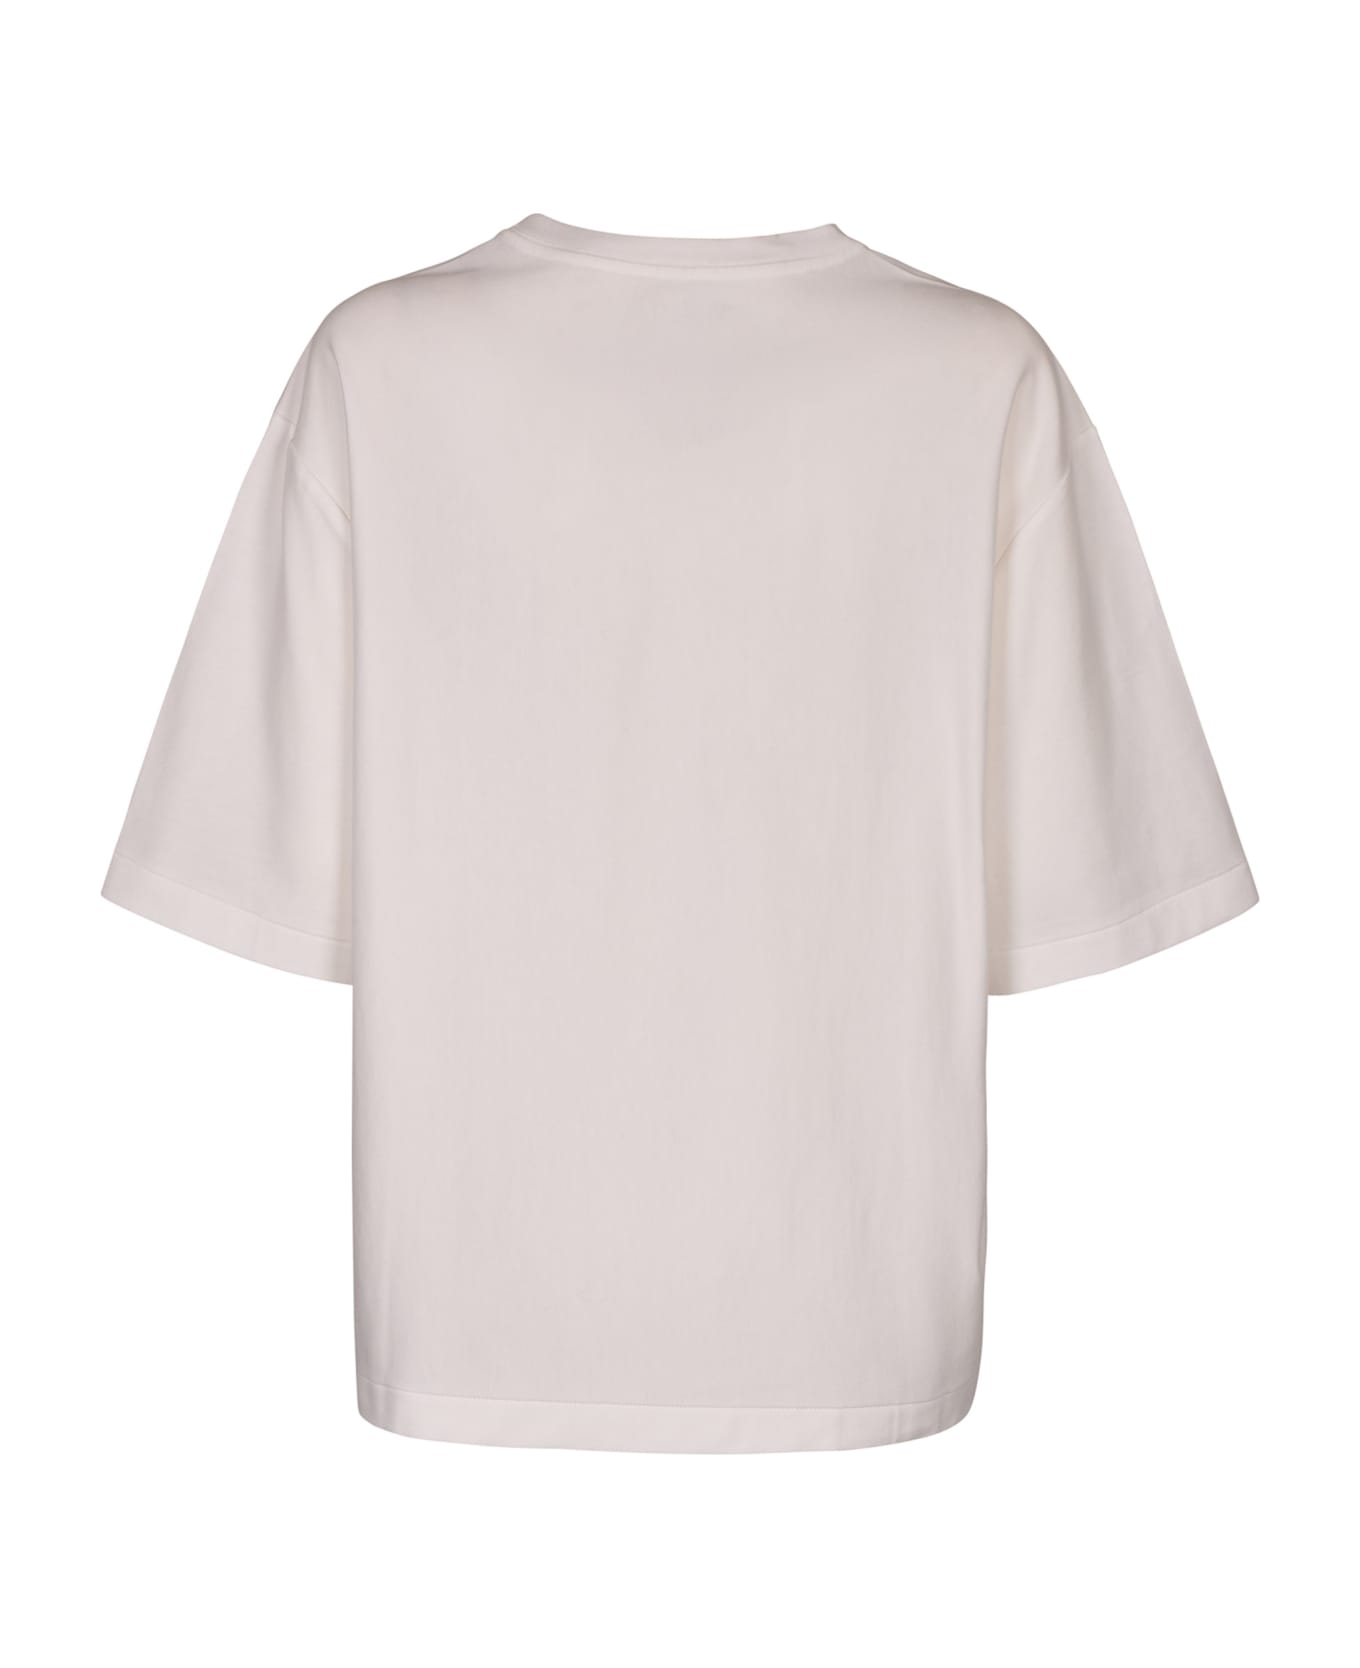 Tanaka The T-shirt - White Tシャツ